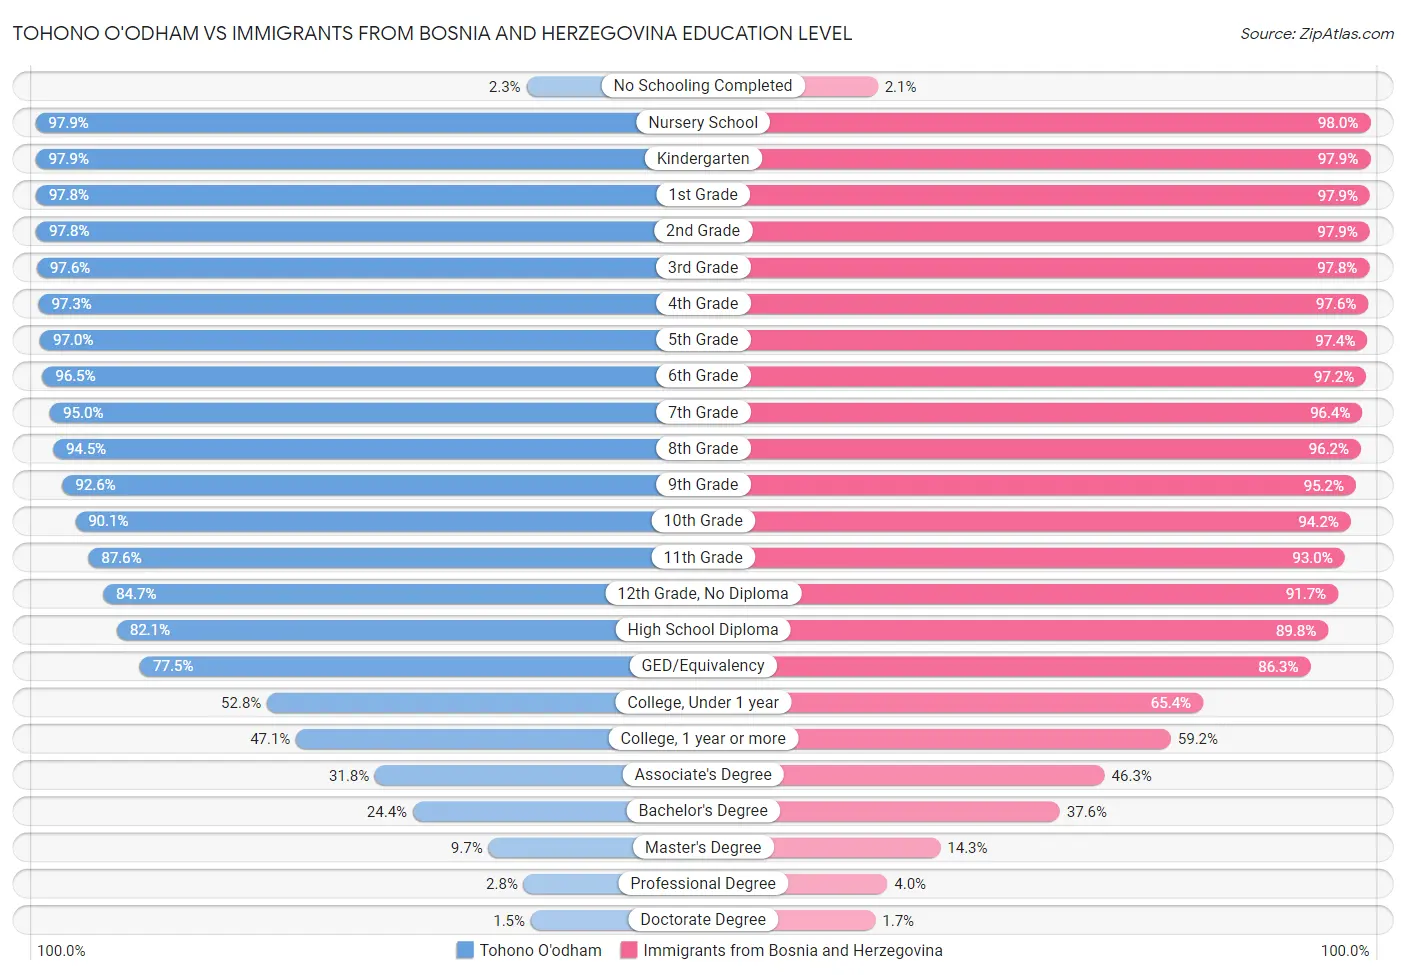 Tohono O'odham vs Immigrants from Bosnia and Herzegovina Education Level